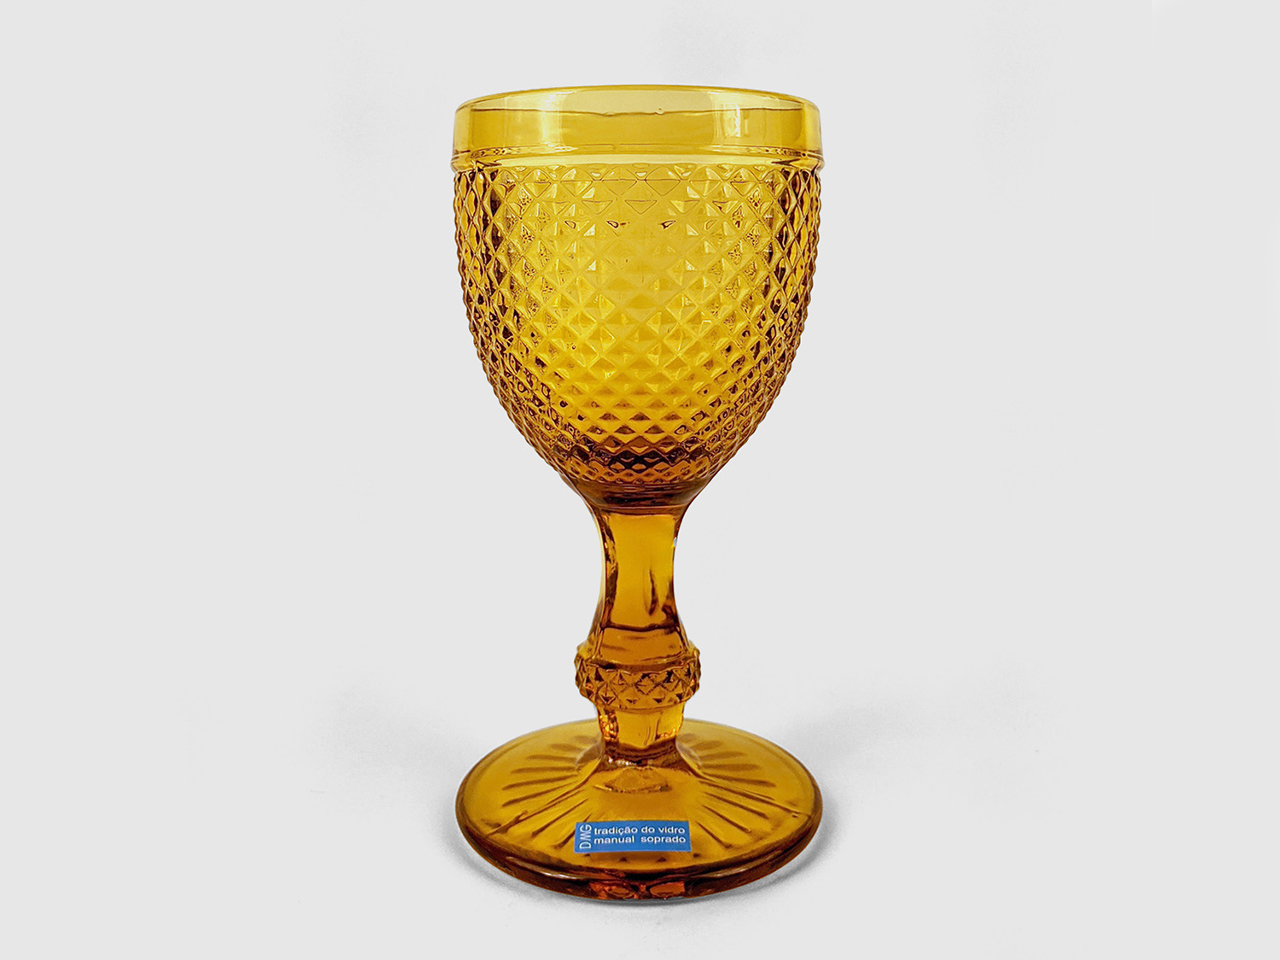 An amber glass wine glass from DMG for summer outdoor entertaining.